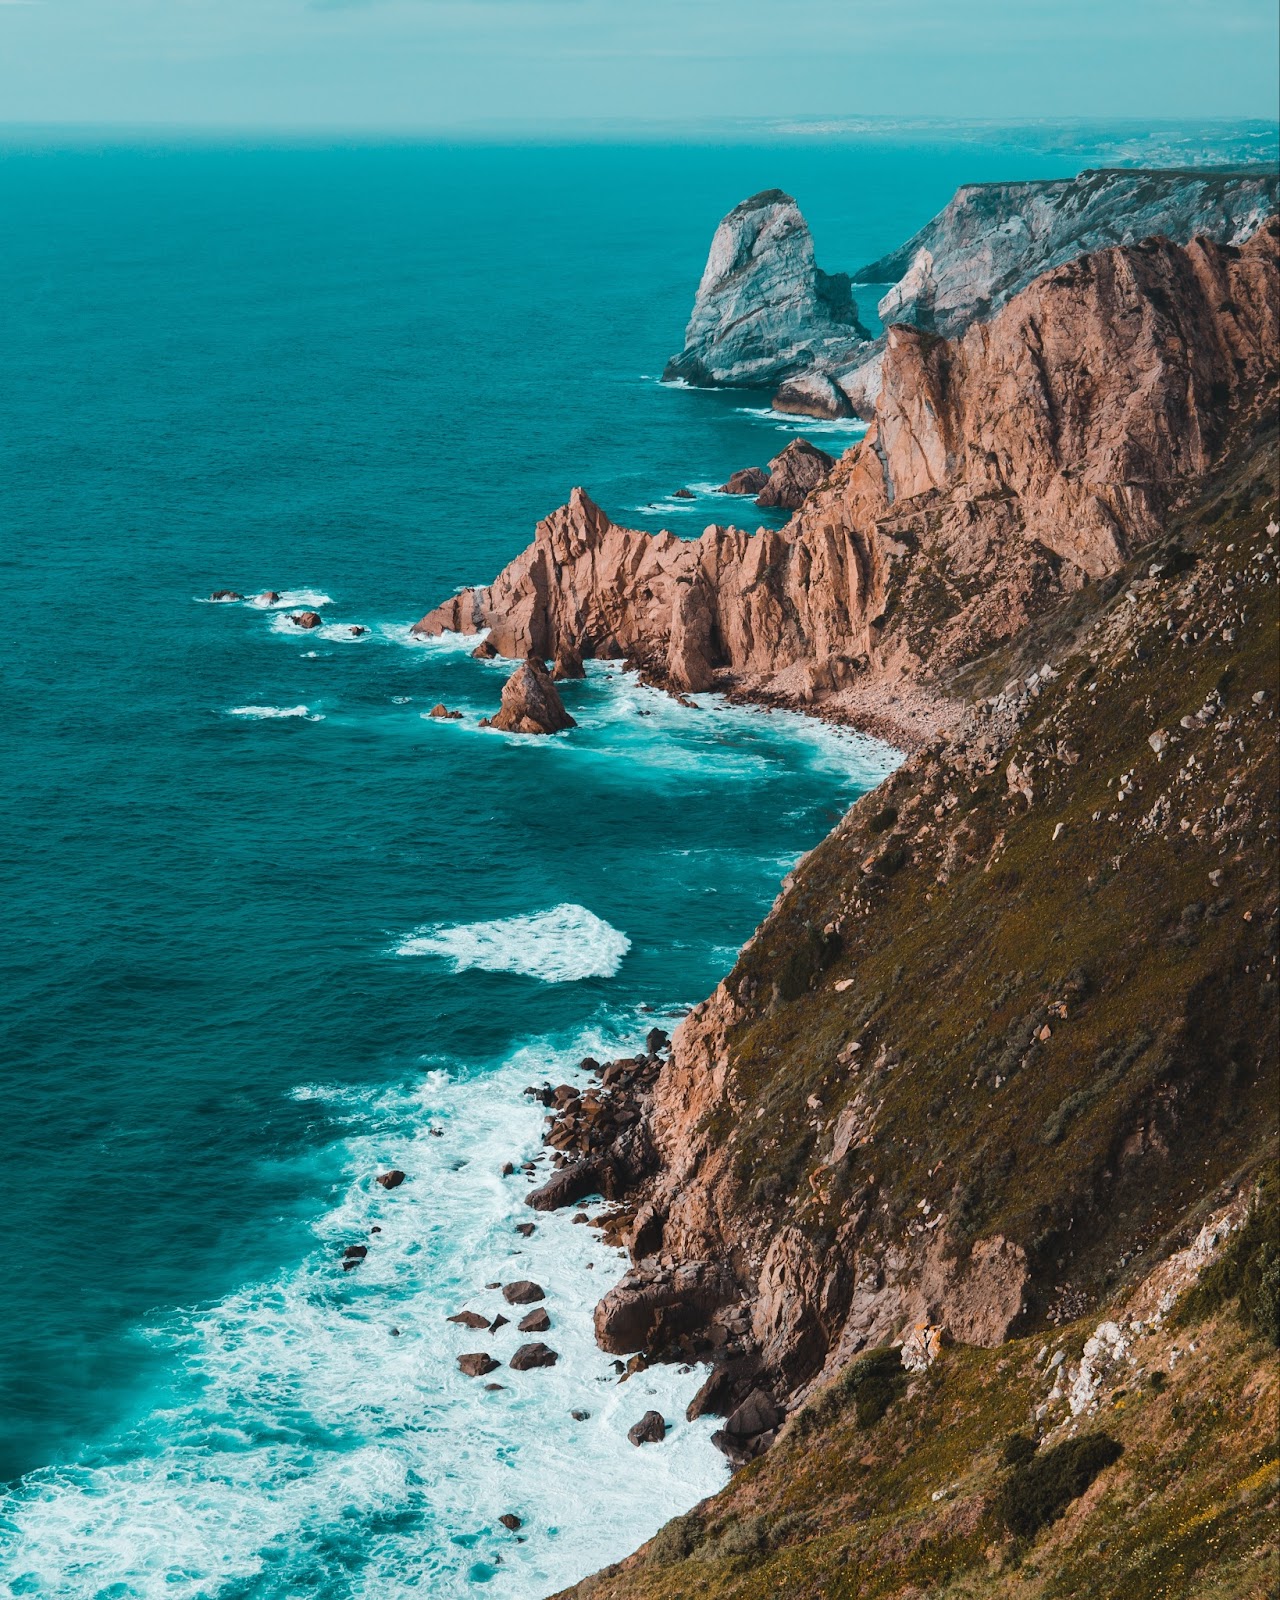 The scenic Atlantic coastline near Cascais with dramatic cliffs.
